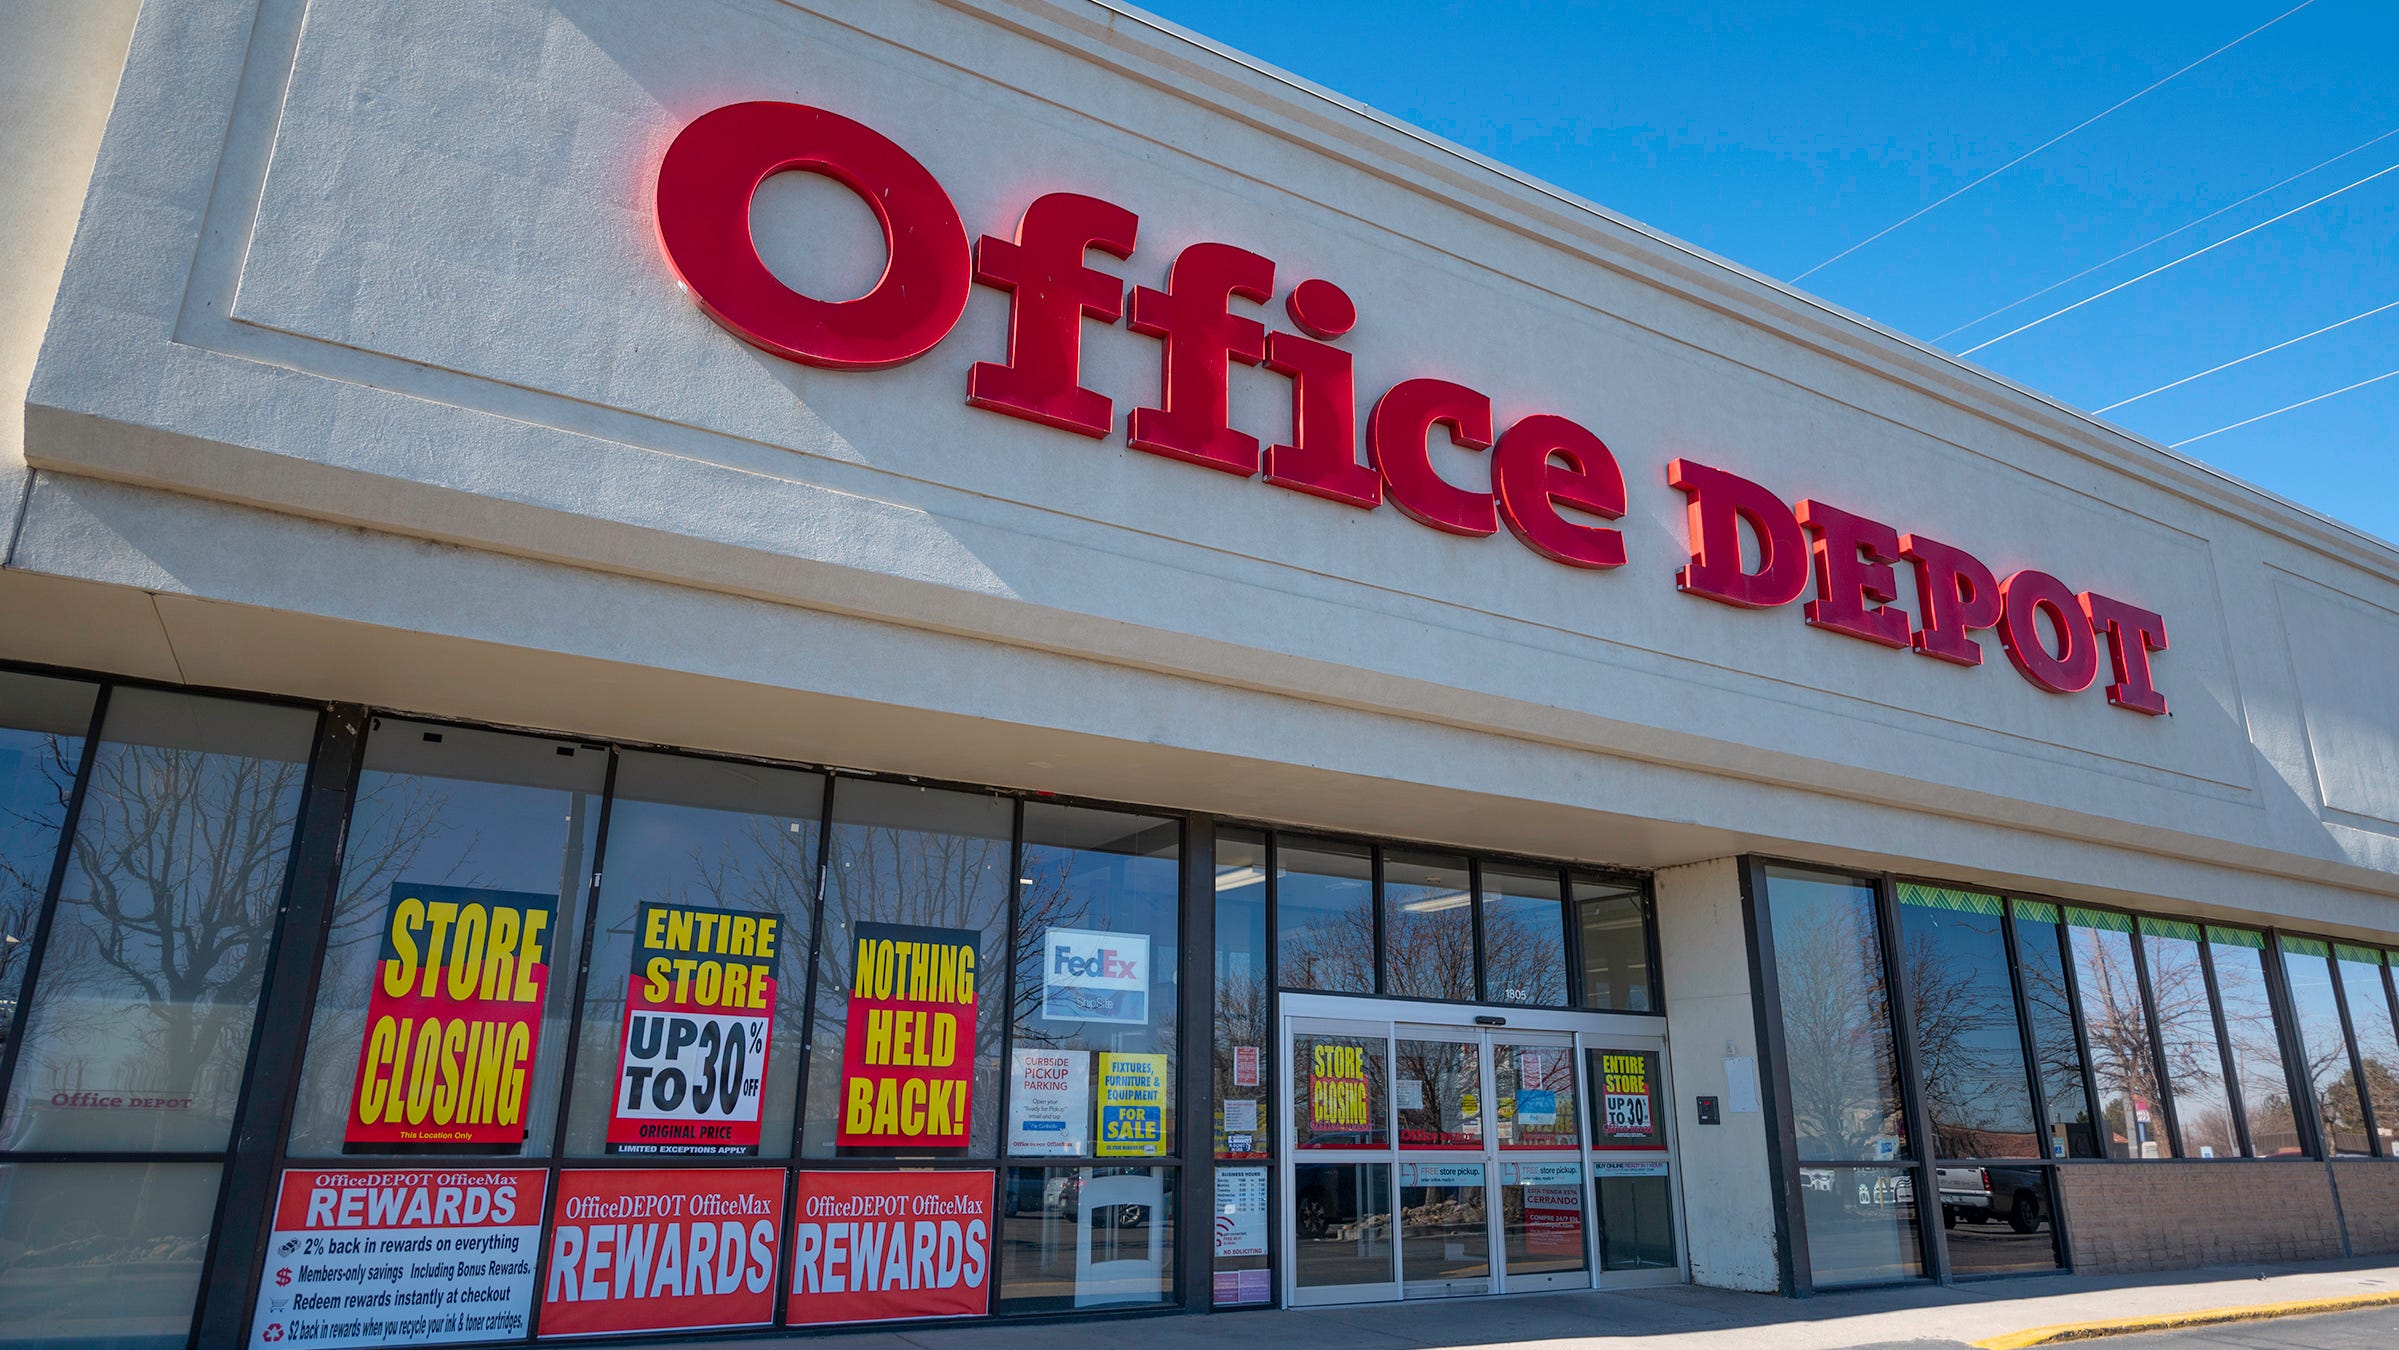 Pueblo Office Depot hosting liquidation sale, closing in March